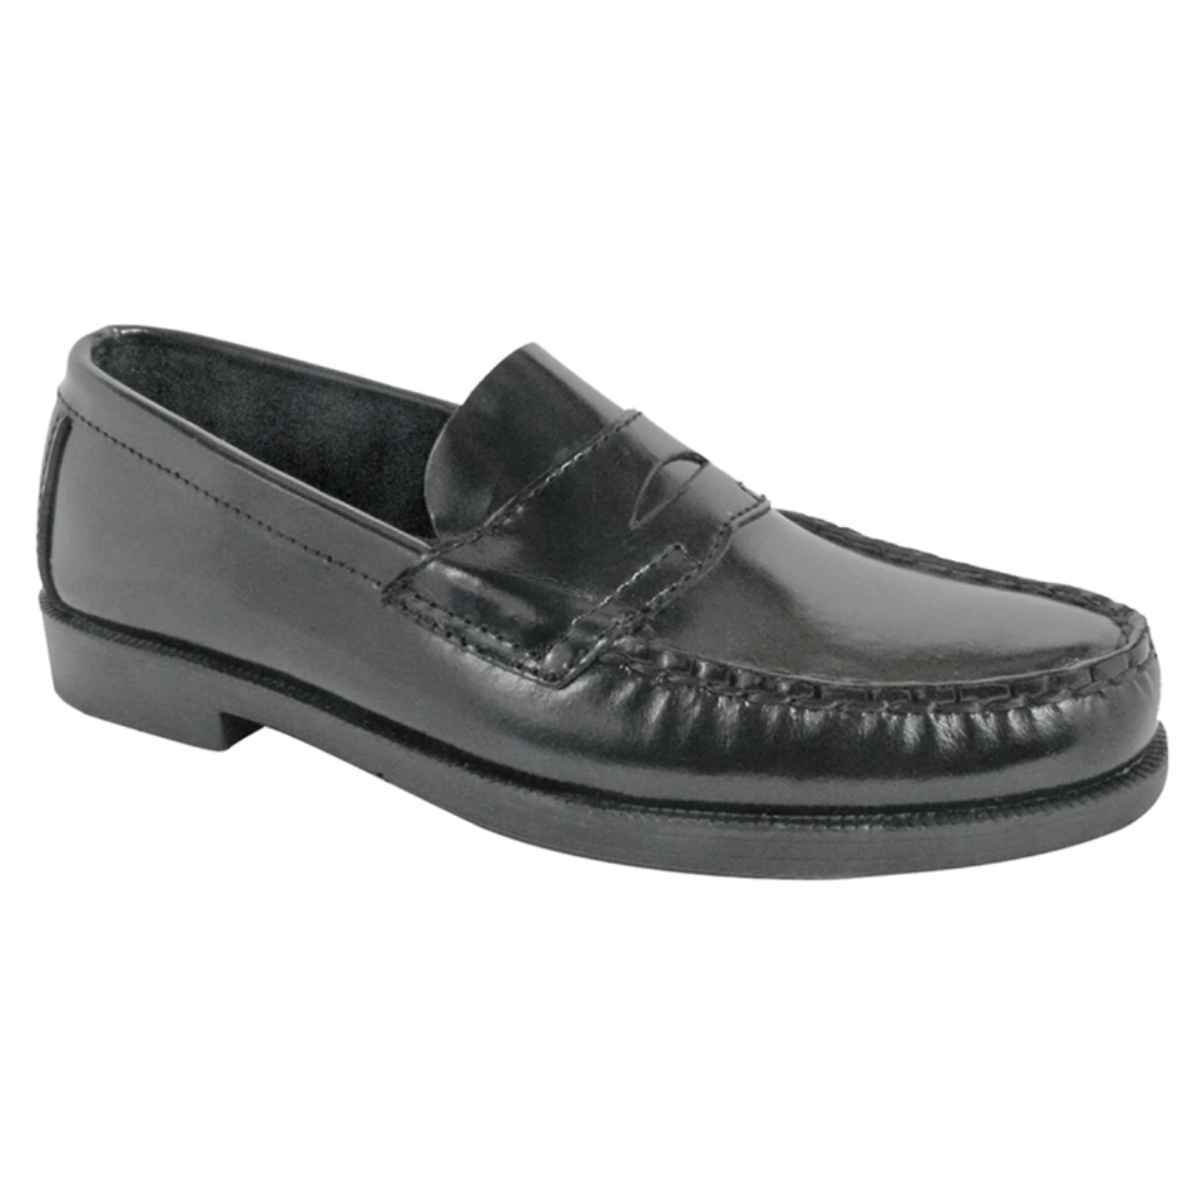 Carlos Men’s Black Leather Penny Loafers - Kids Shoe Box